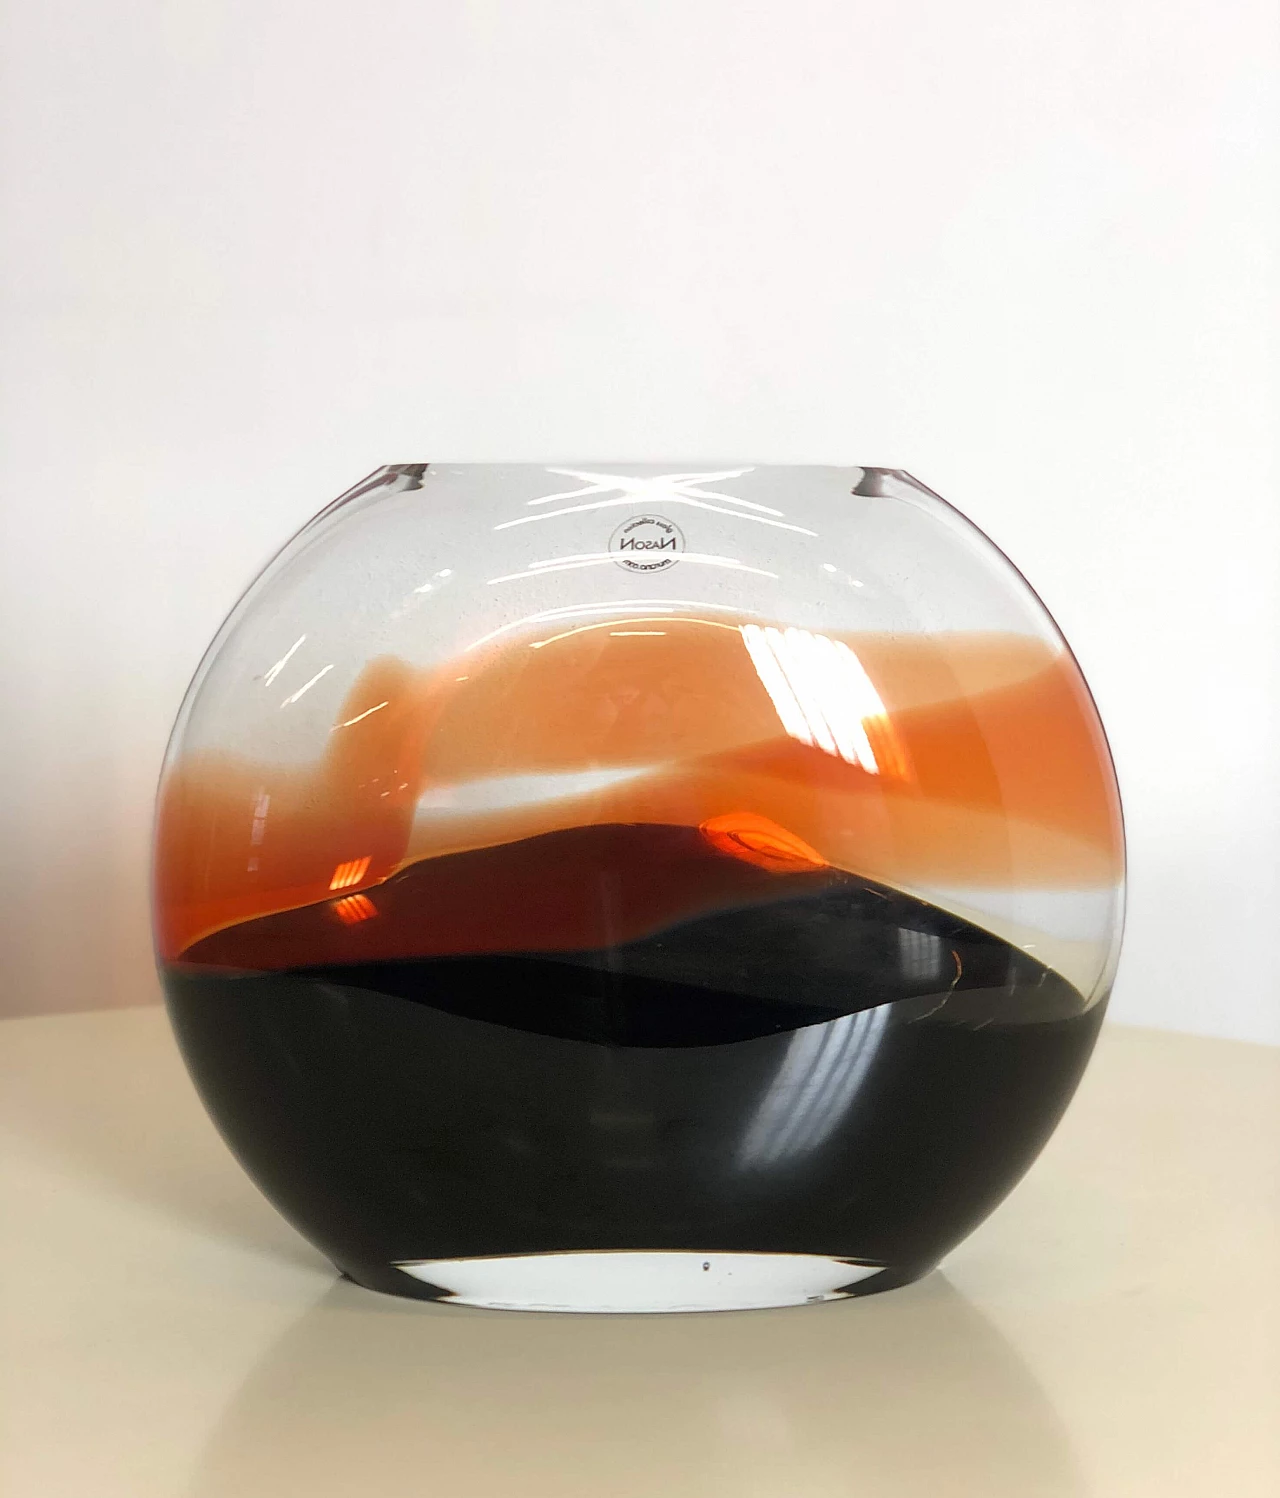 Murano glass vase by Nason, 70s 1201666